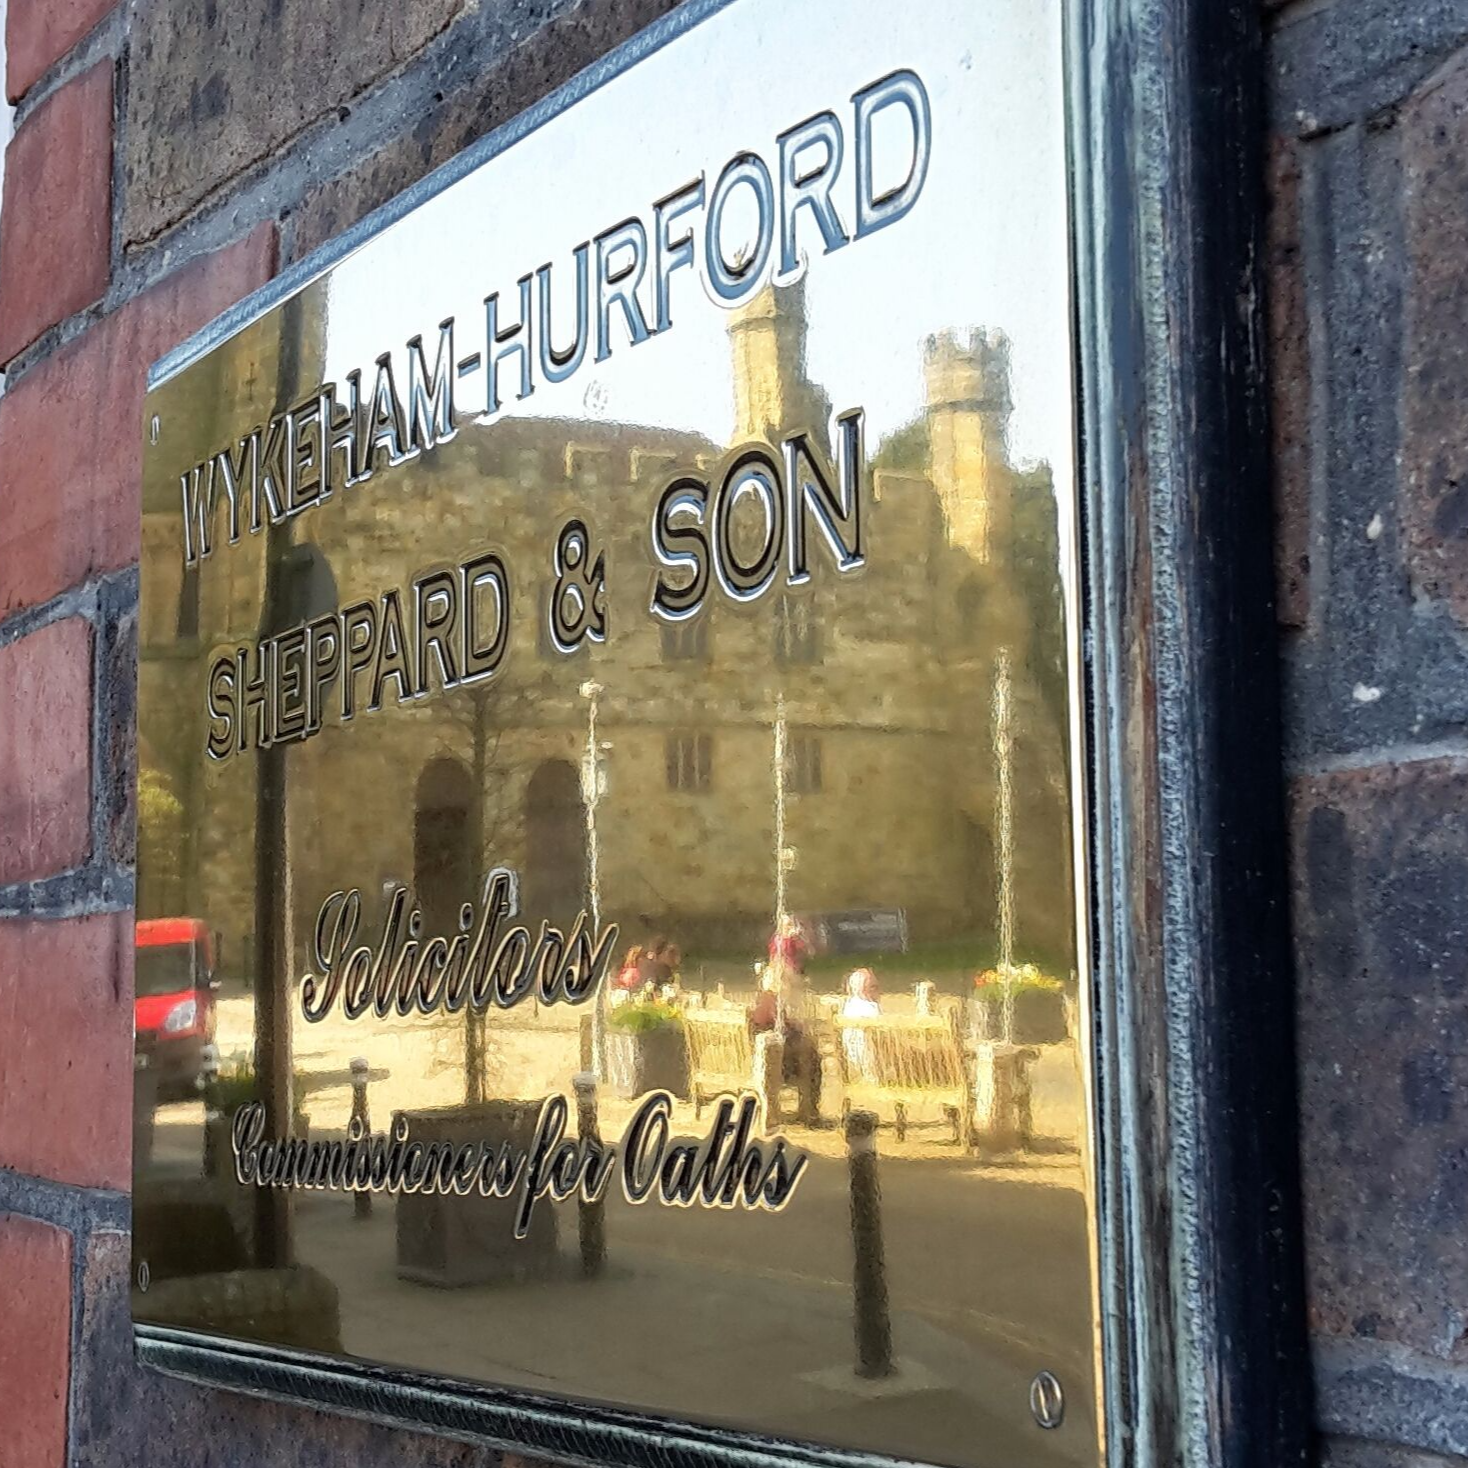 Wykeham-Hurford Sheppard & Son Ltd